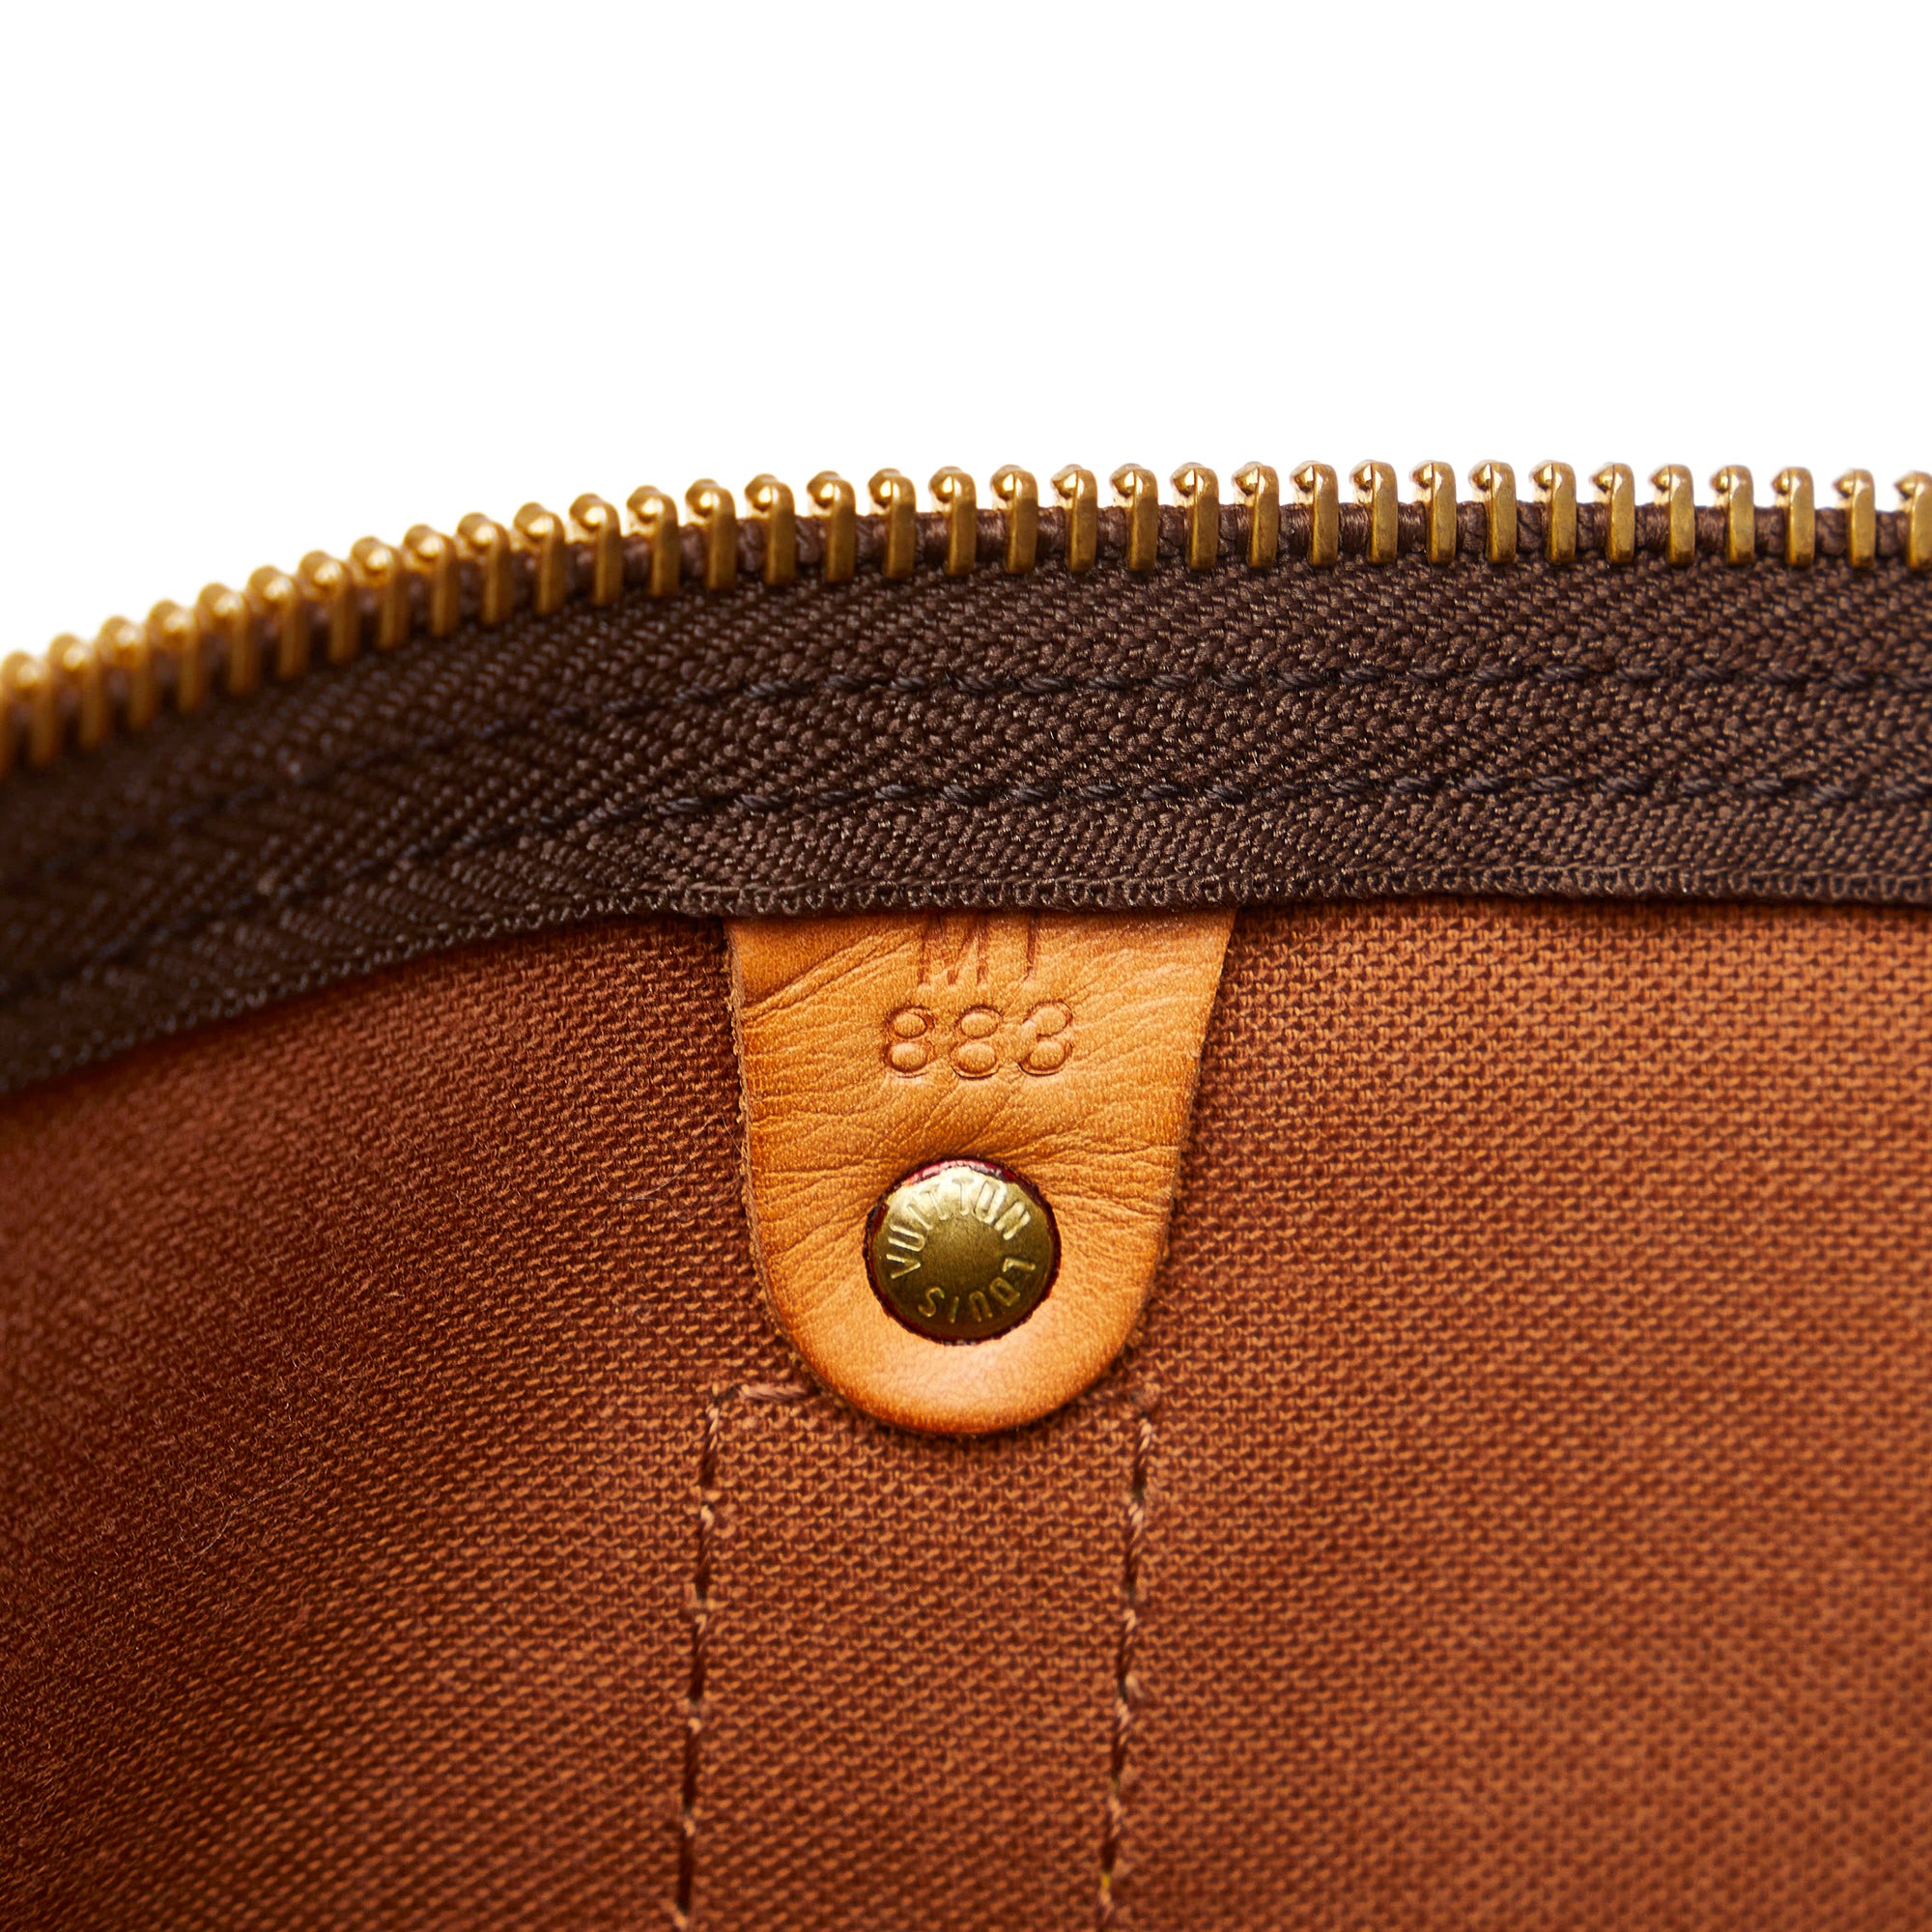 Louis Vuitton Keepall Travel bag 394050